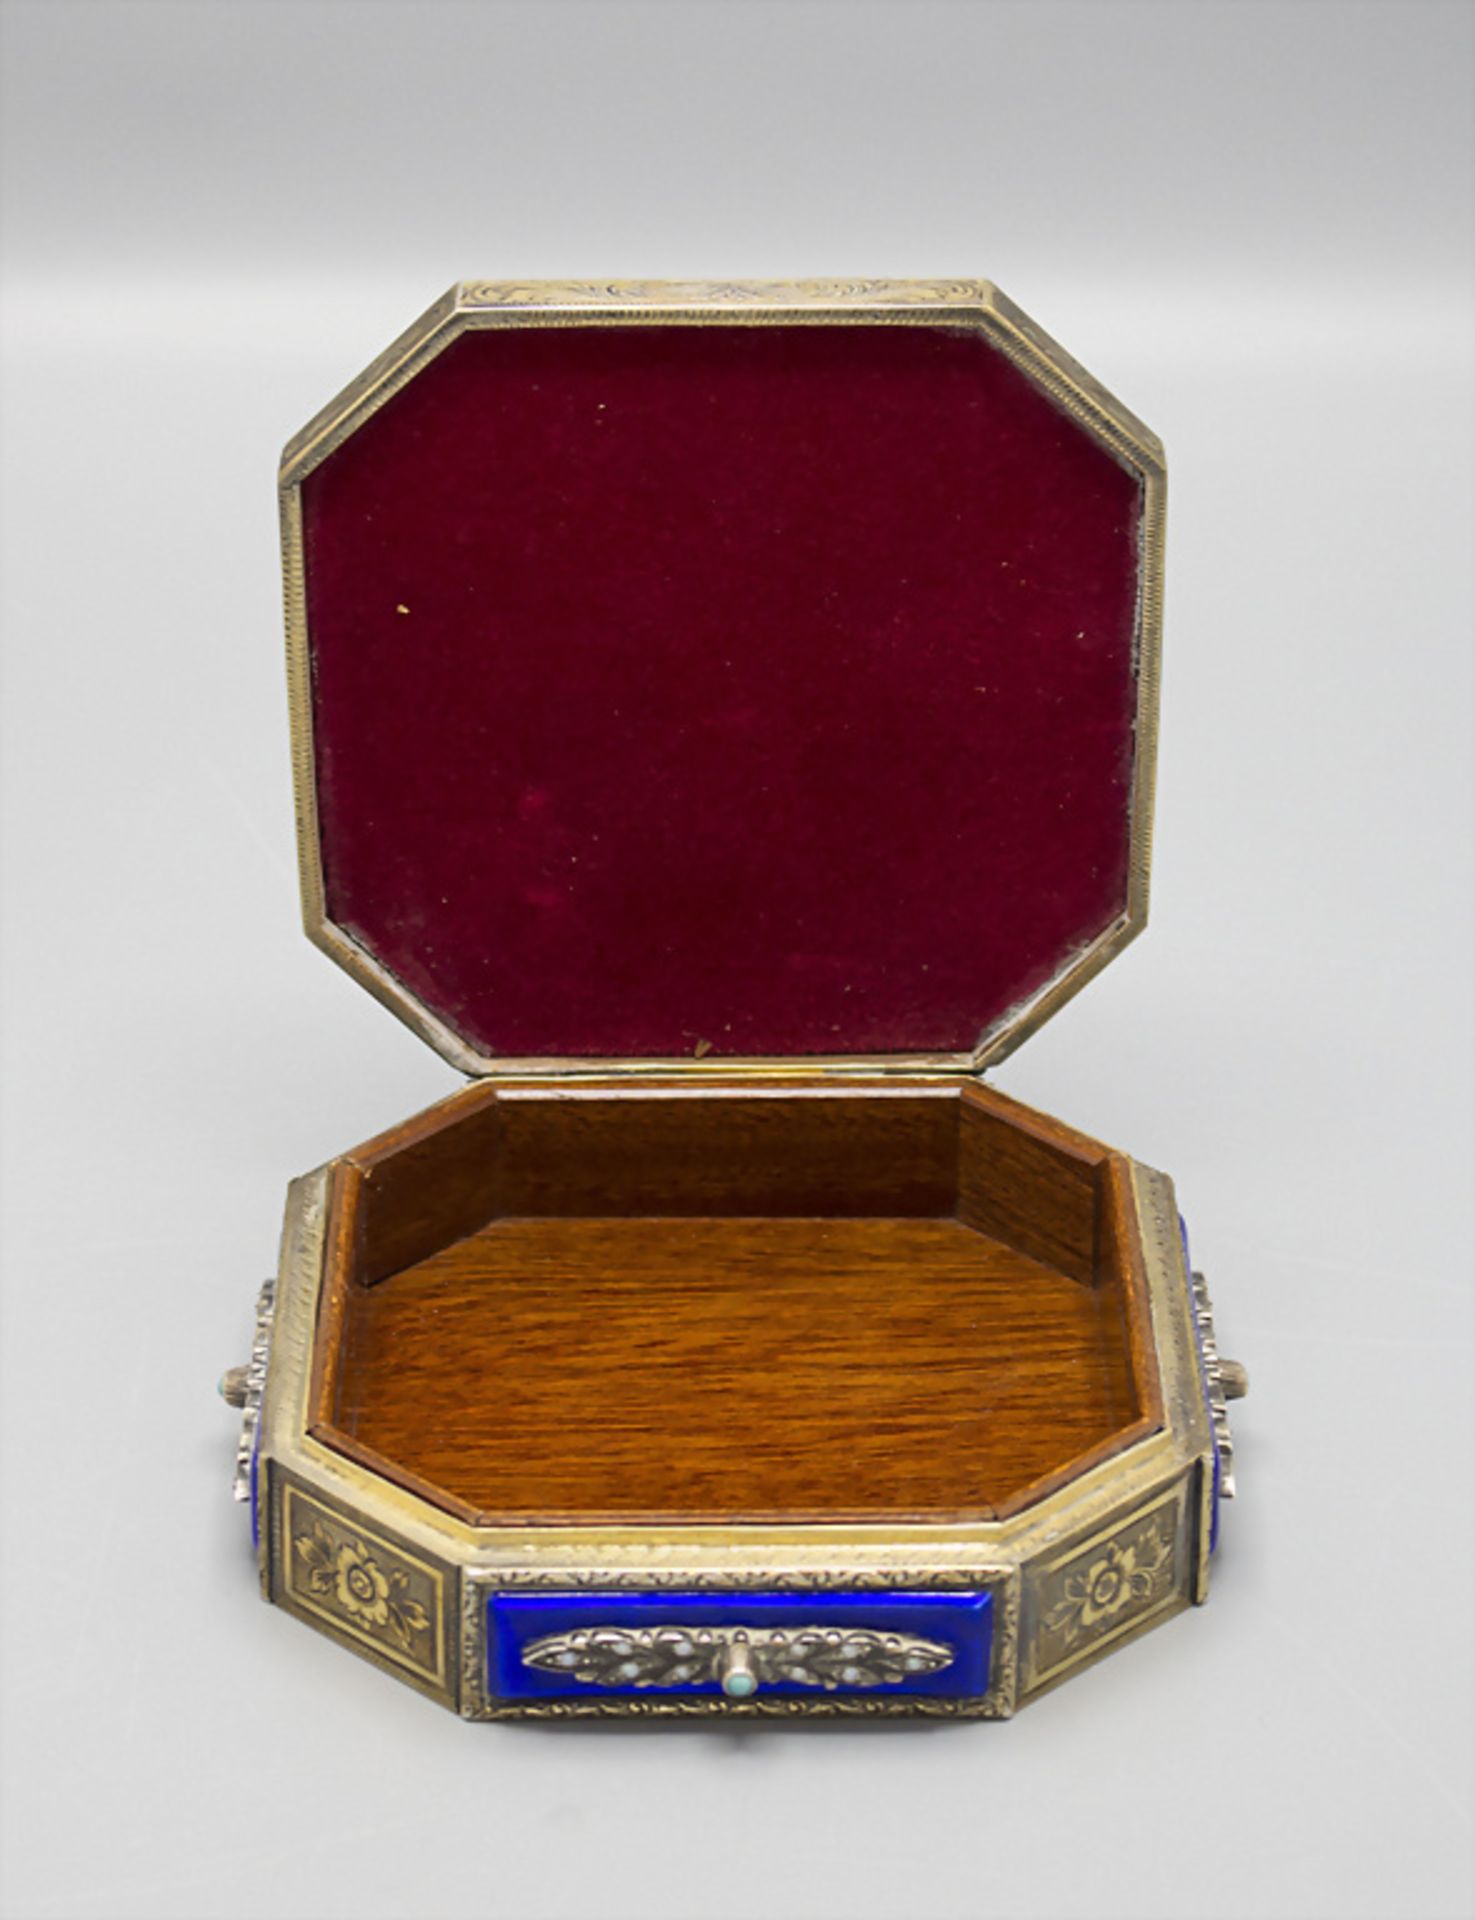 Art Déco Silber Schmuckkästchen / A silver Art Déco trinket box, um 1920 - Image 7 of 7